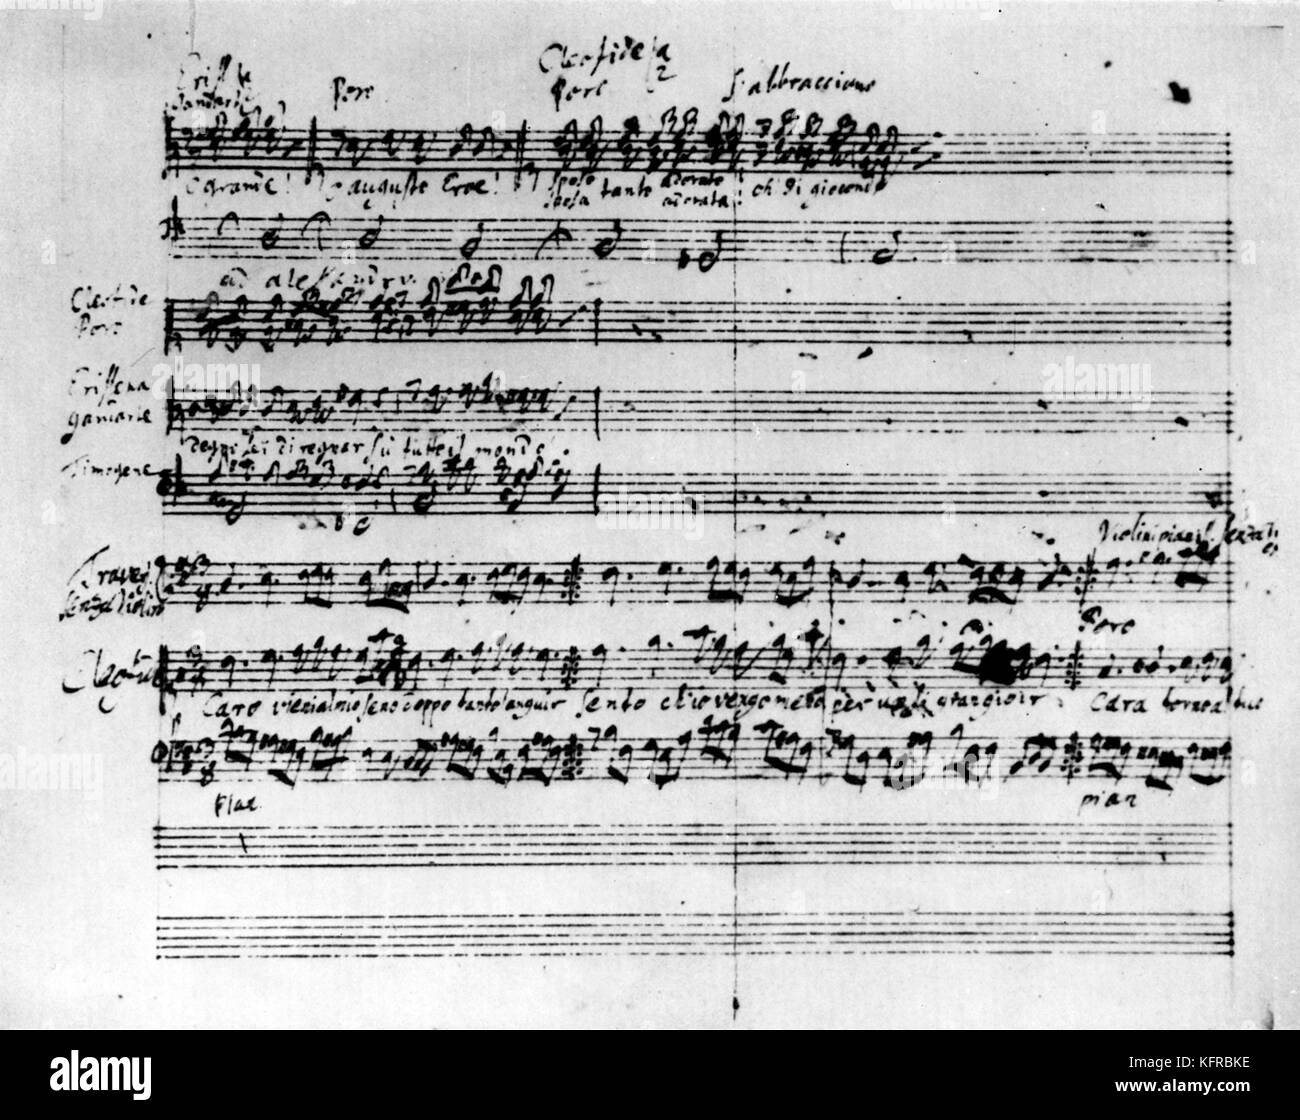 Poro - opera by Handel. Score of final scene. Handwritten. German-English composer, 23 February 1685 - 14 April 1759 Stock Photo